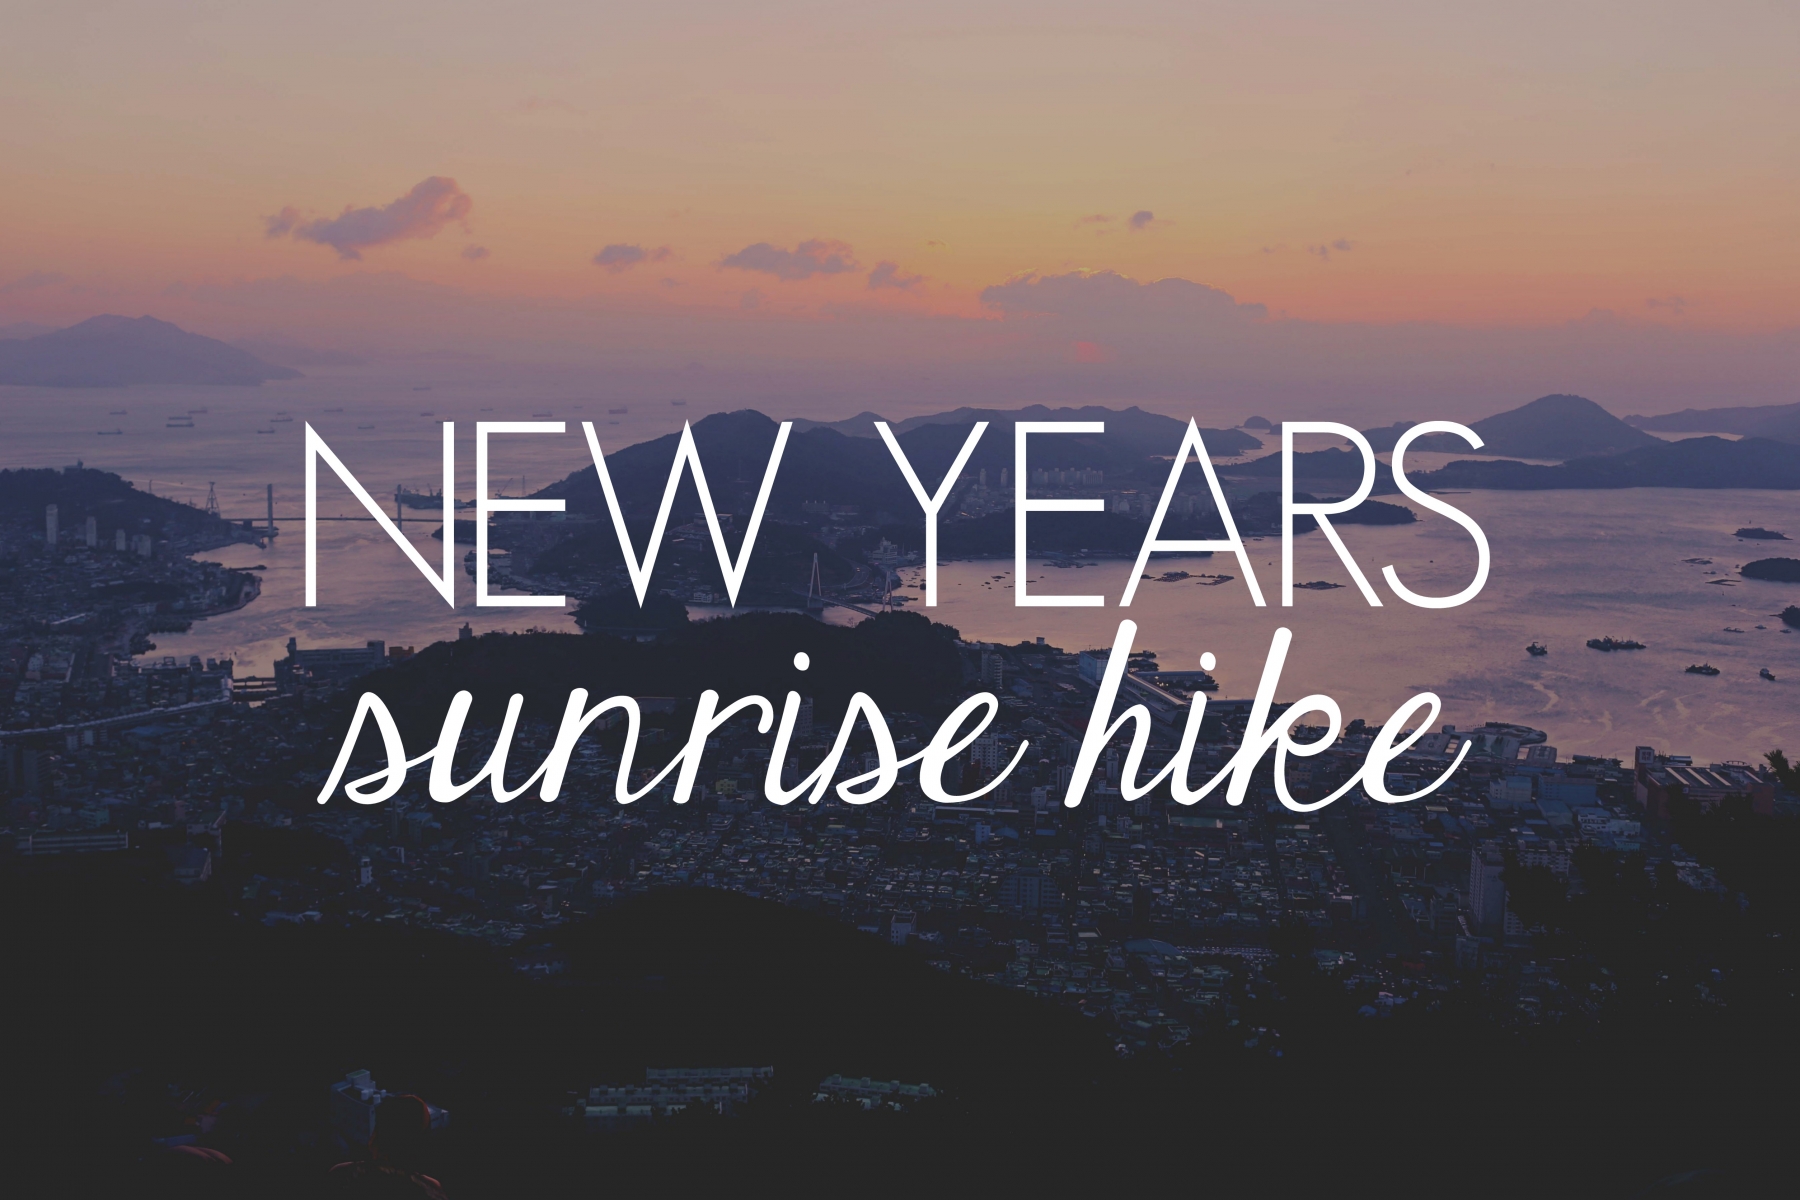 New Year's Sunrise Hike // KOREA